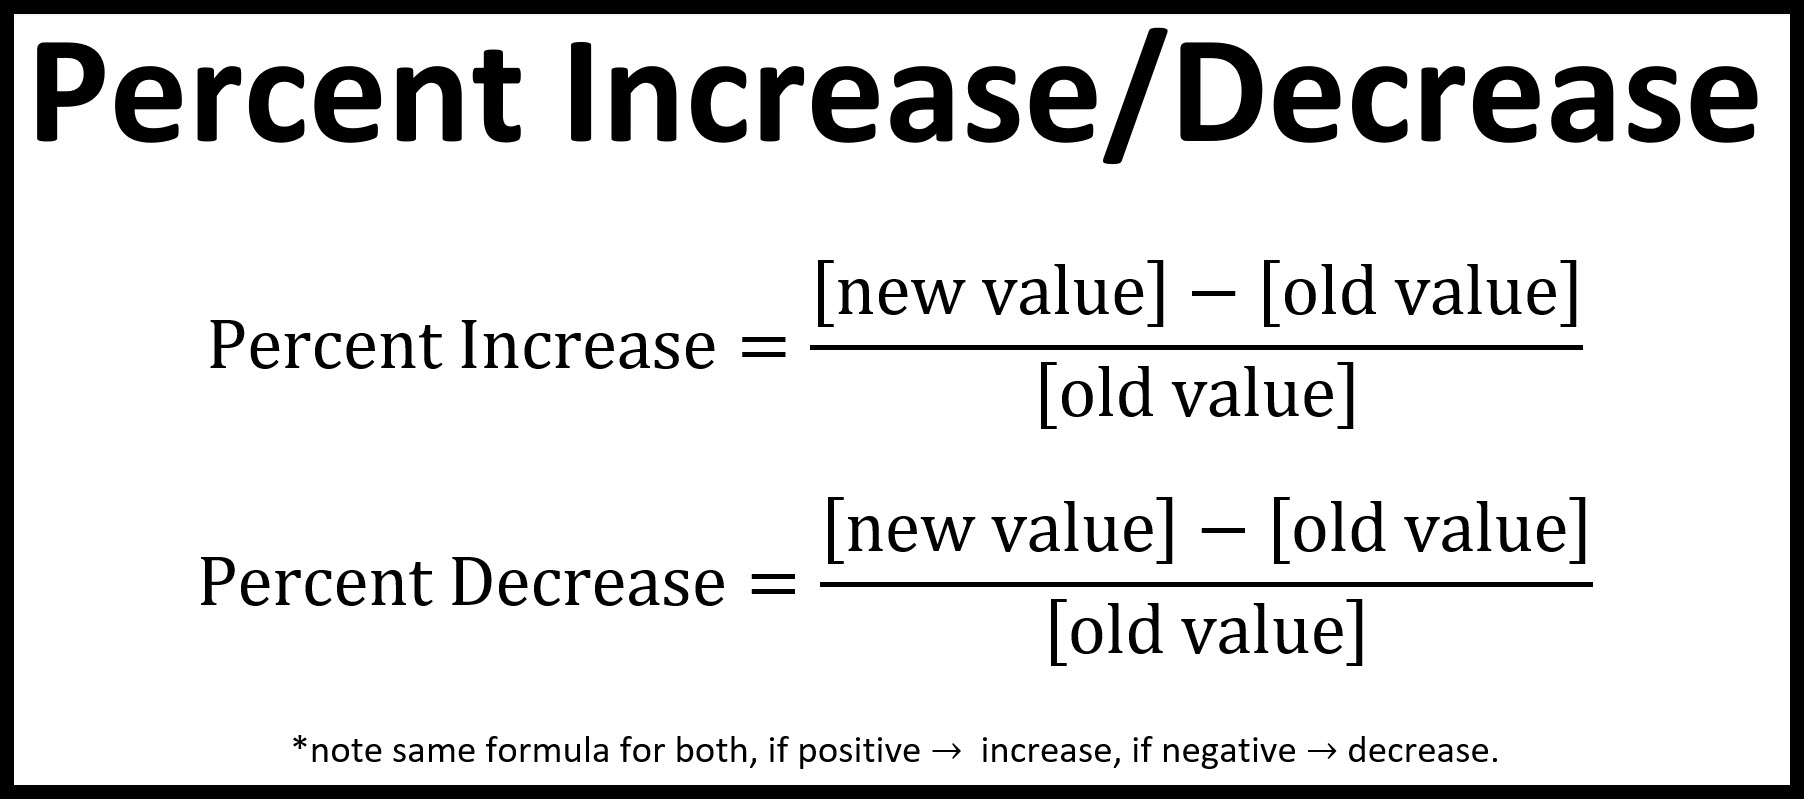 Percent Increase/Decrease Formula